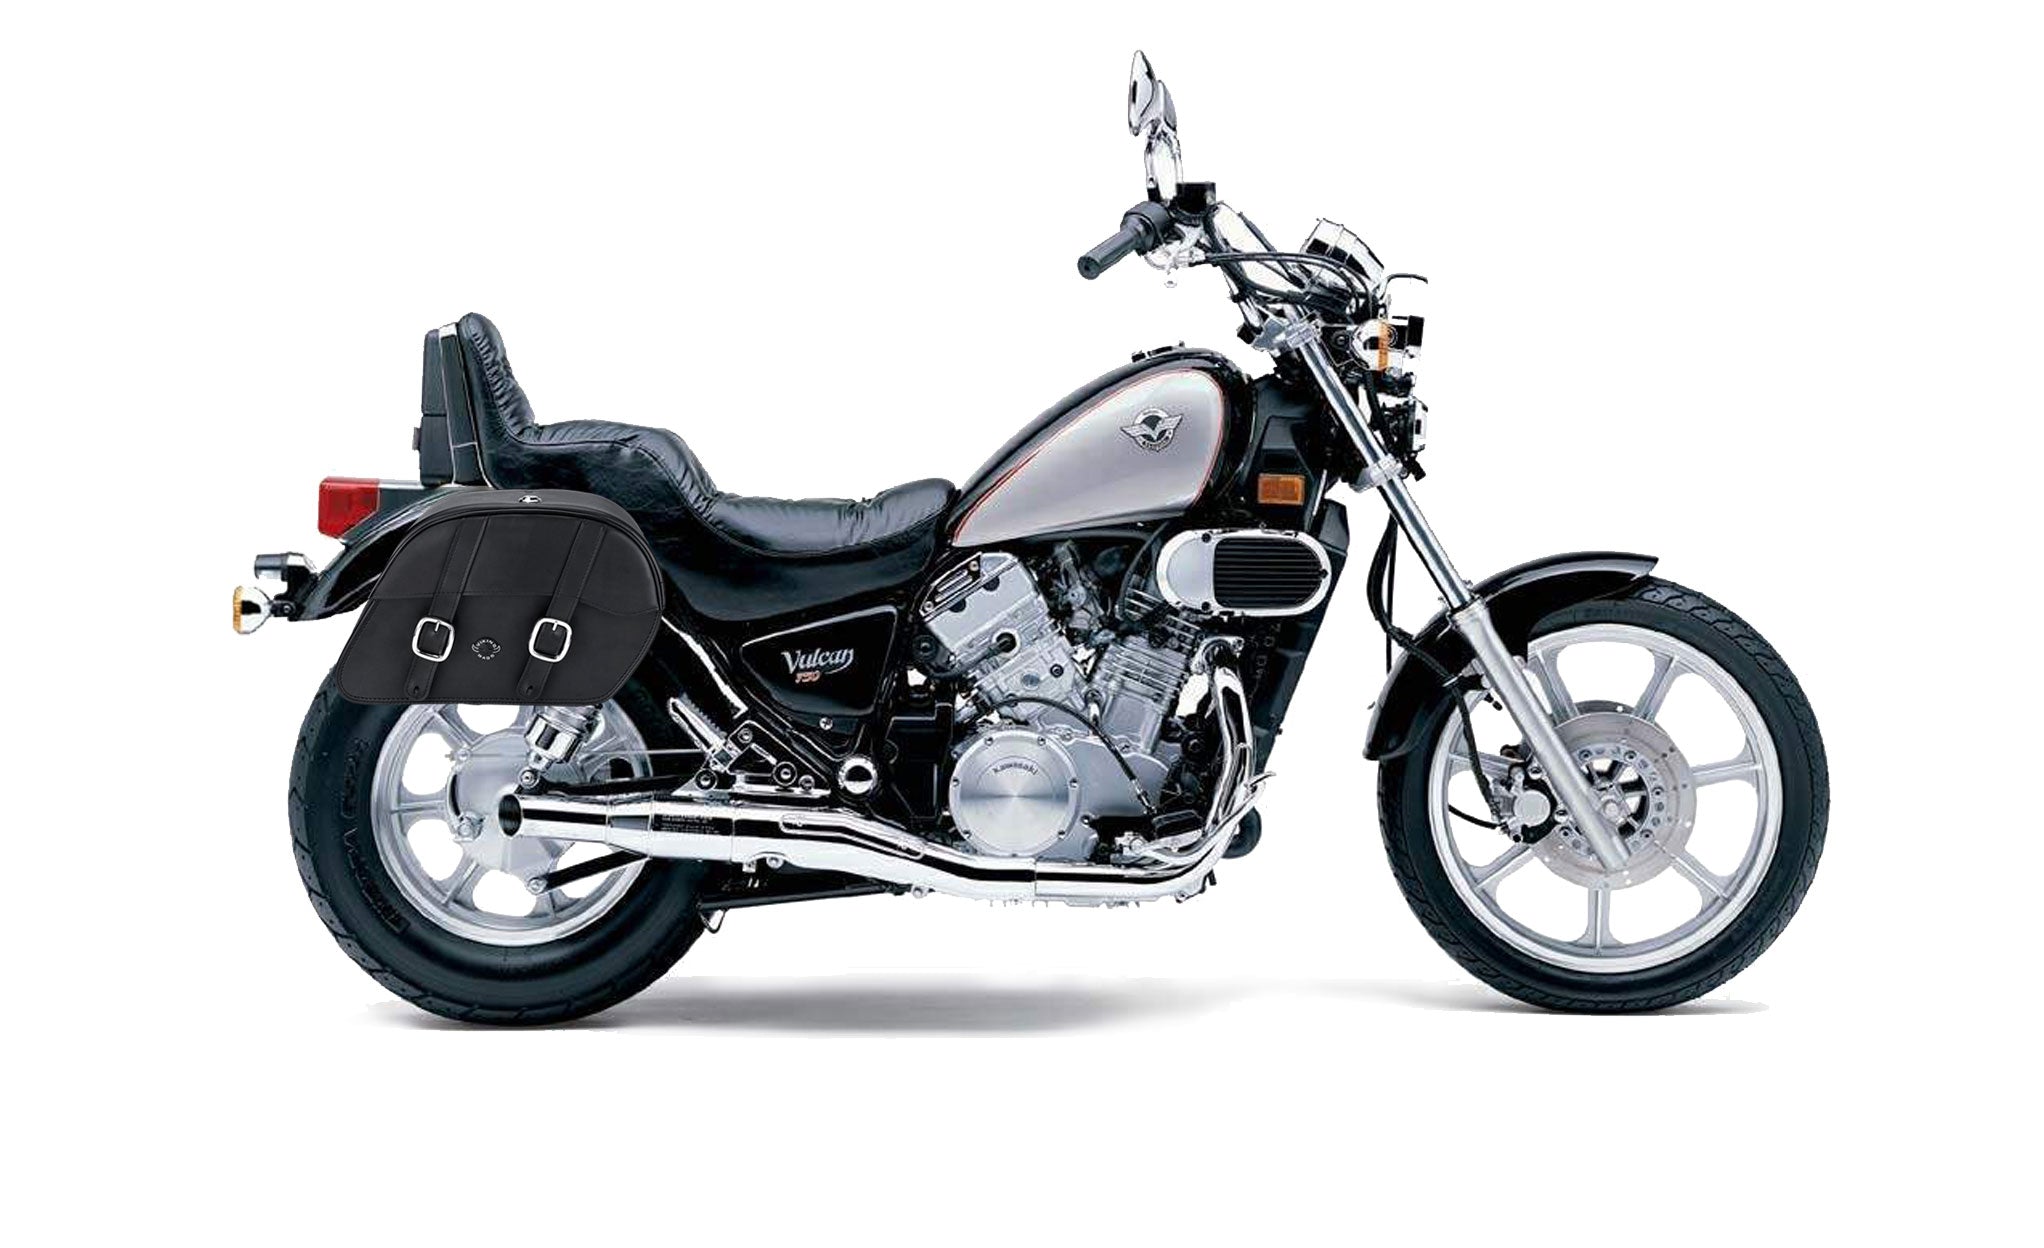 Viking Skarner Medium Lockable Kawasaki Vulcan 750 Vn750 Leather Motorcycle Saddlebags on Bike Photo @expand